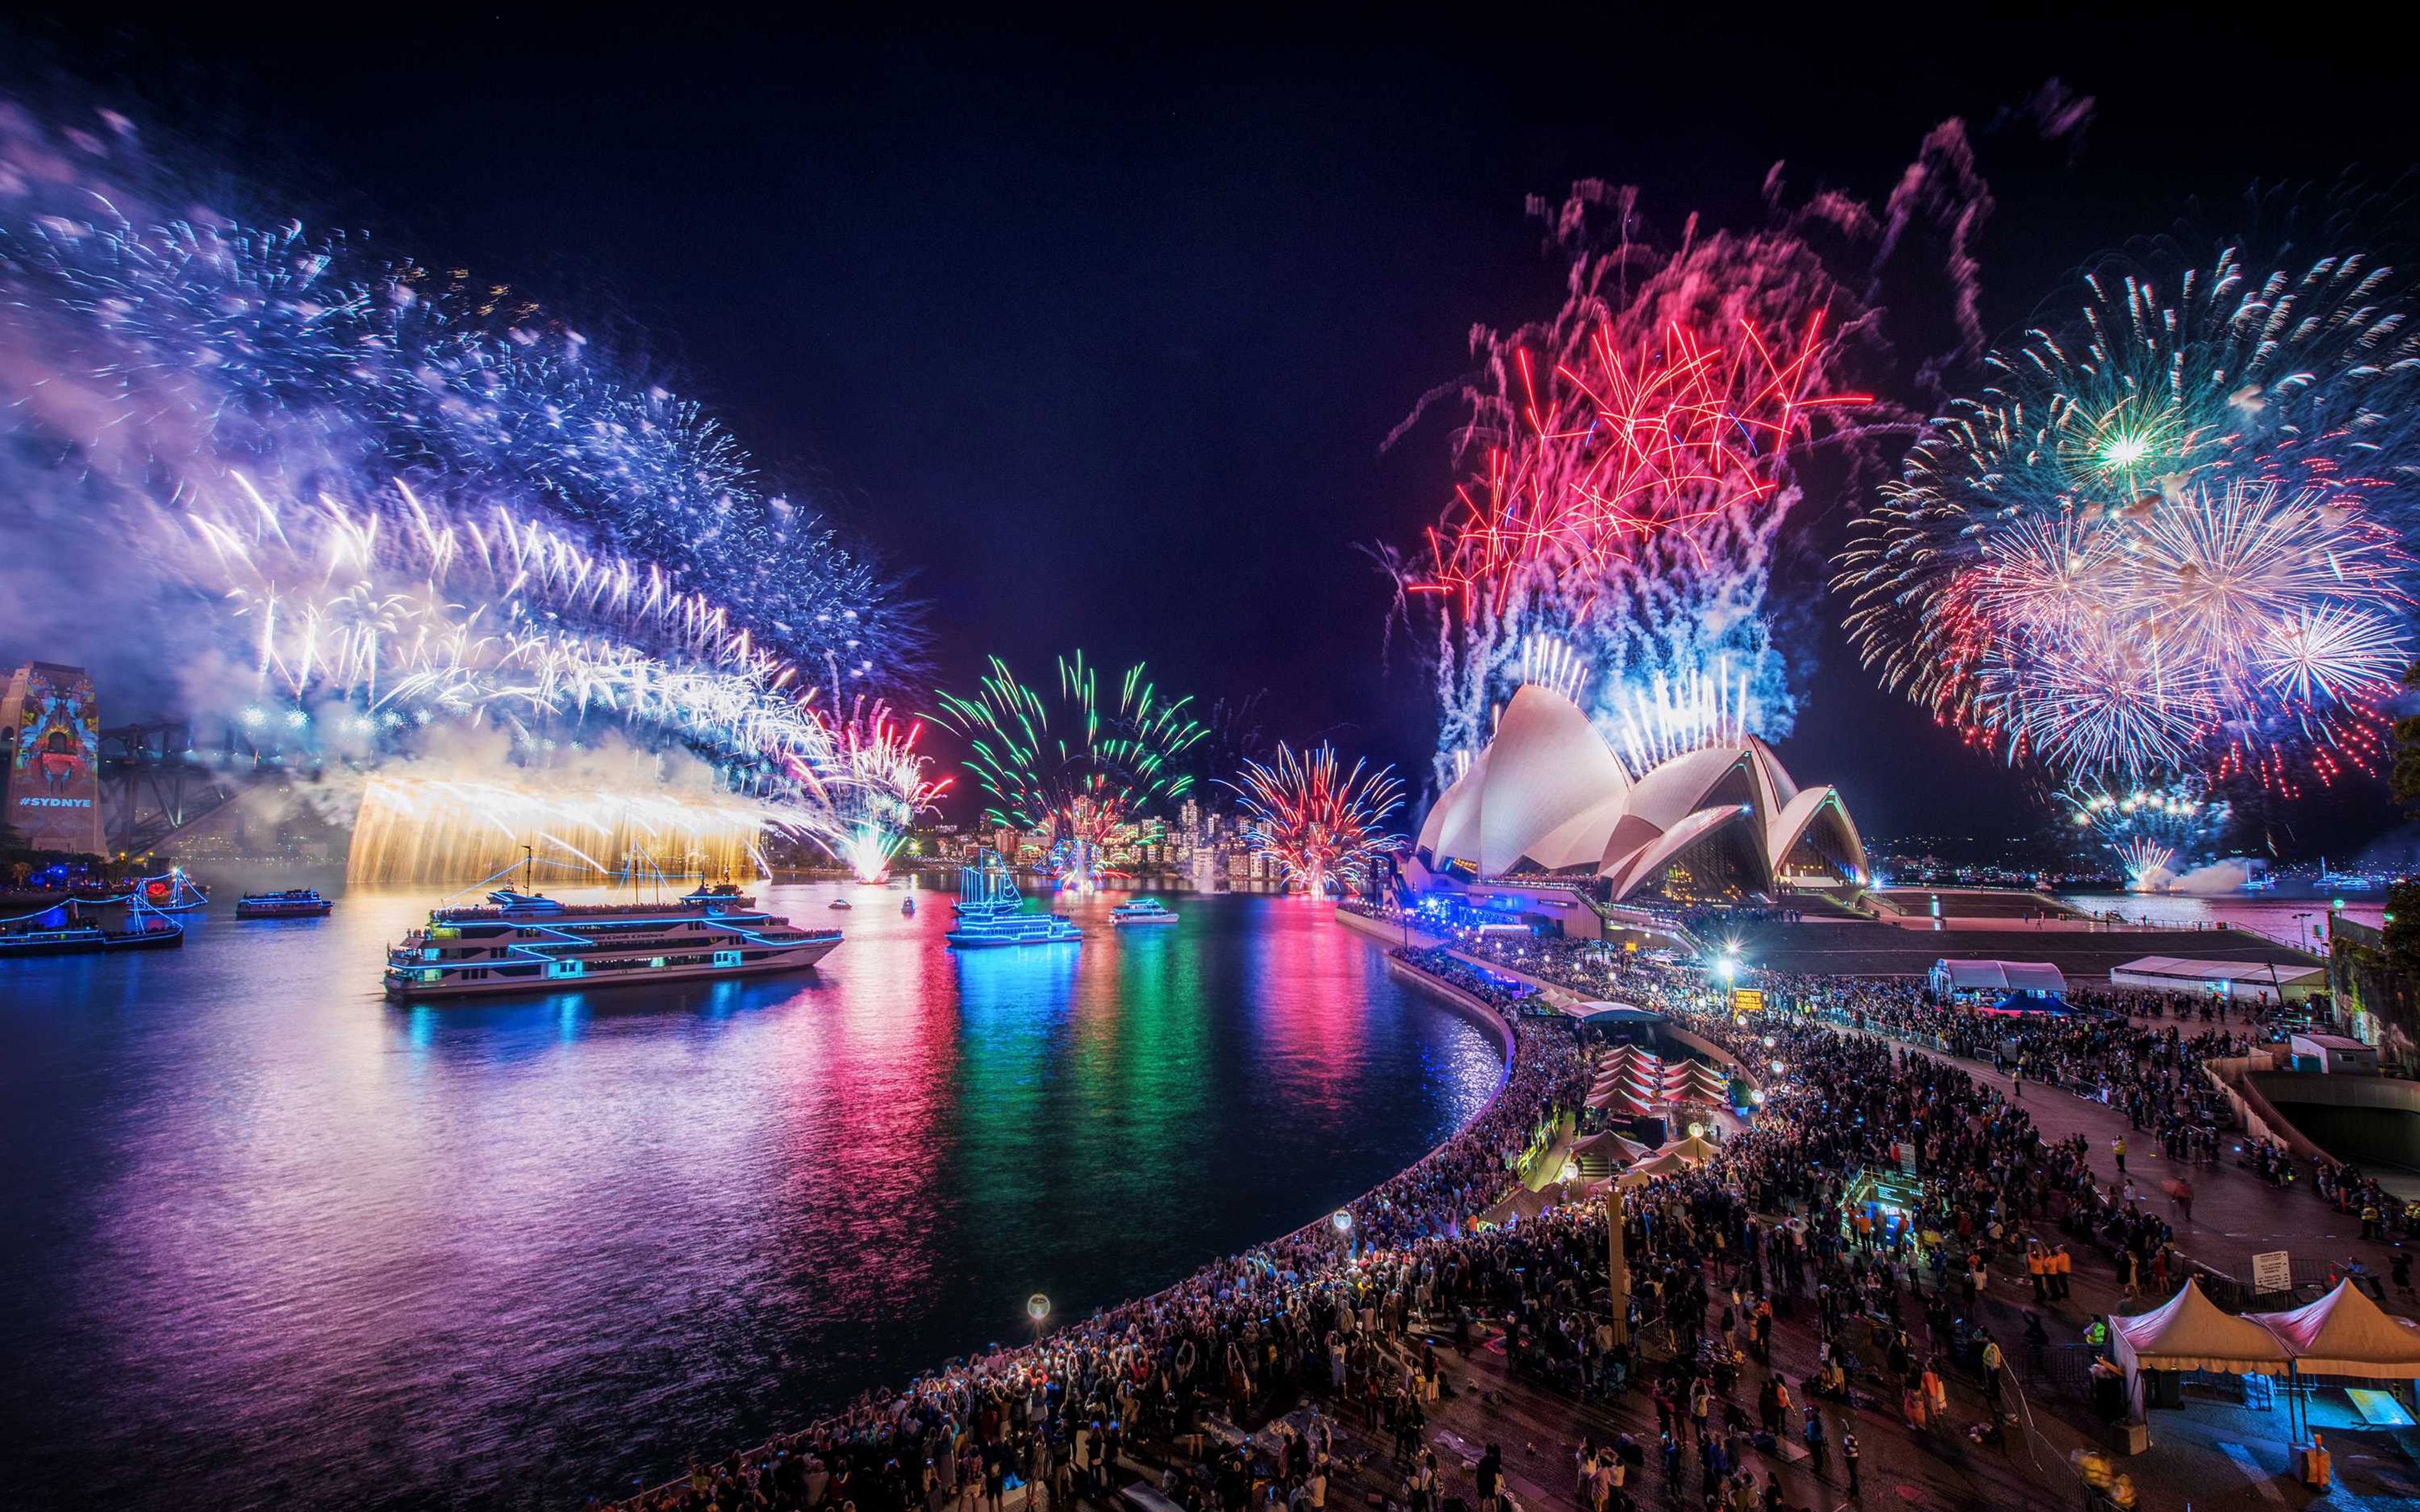 Harbor In Sydney Sydney Australia Fireworks Celebration On New Year's Eve  4k Ultra Hd Desktop Wallpapers For Computers Laptop Tablet And Mobile  Phones 3840х2400 : 